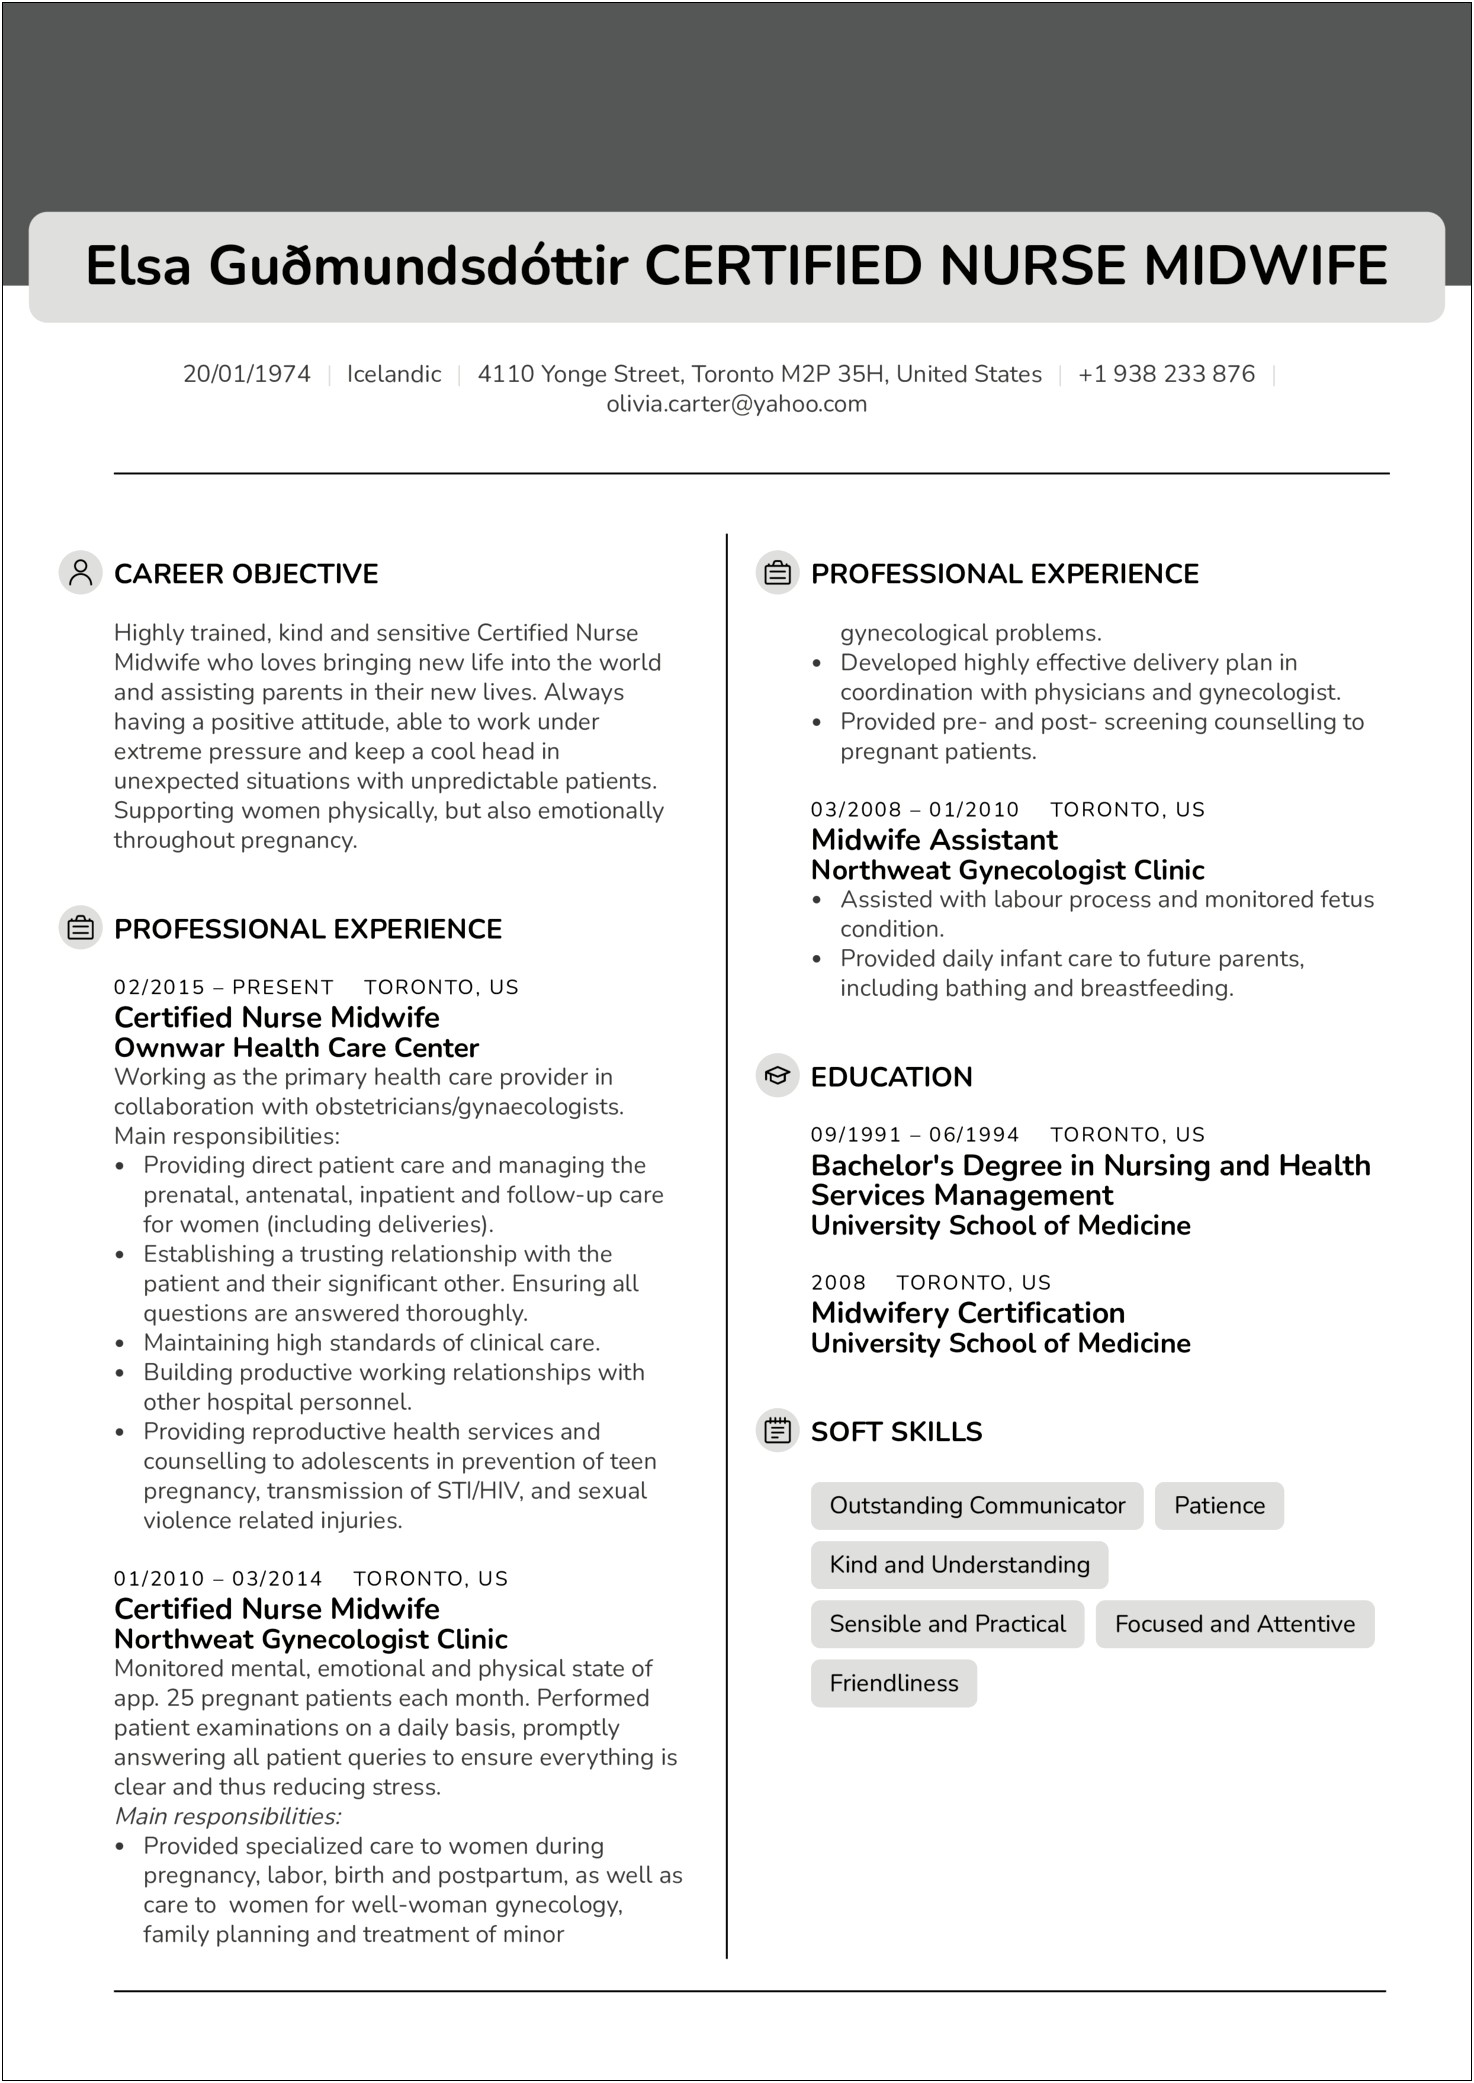 Nursing Aide Job Description For Resume